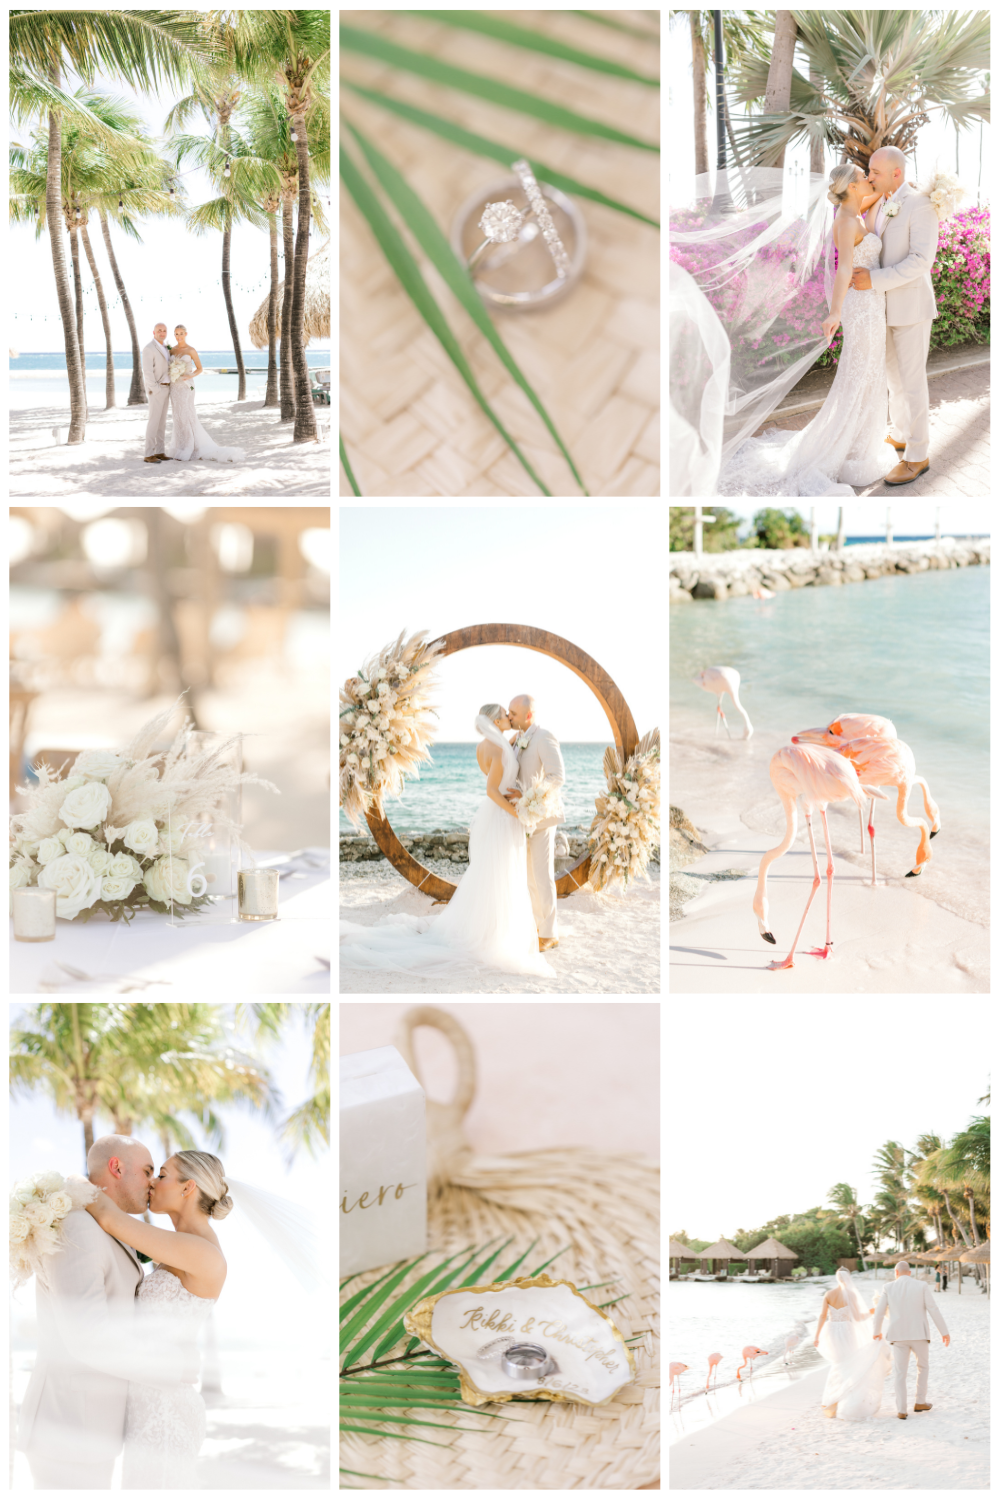 Renaissance Aruba Wedding on Flamingo Island photographed by destination wedding photographer Susan Elizabeth Photography